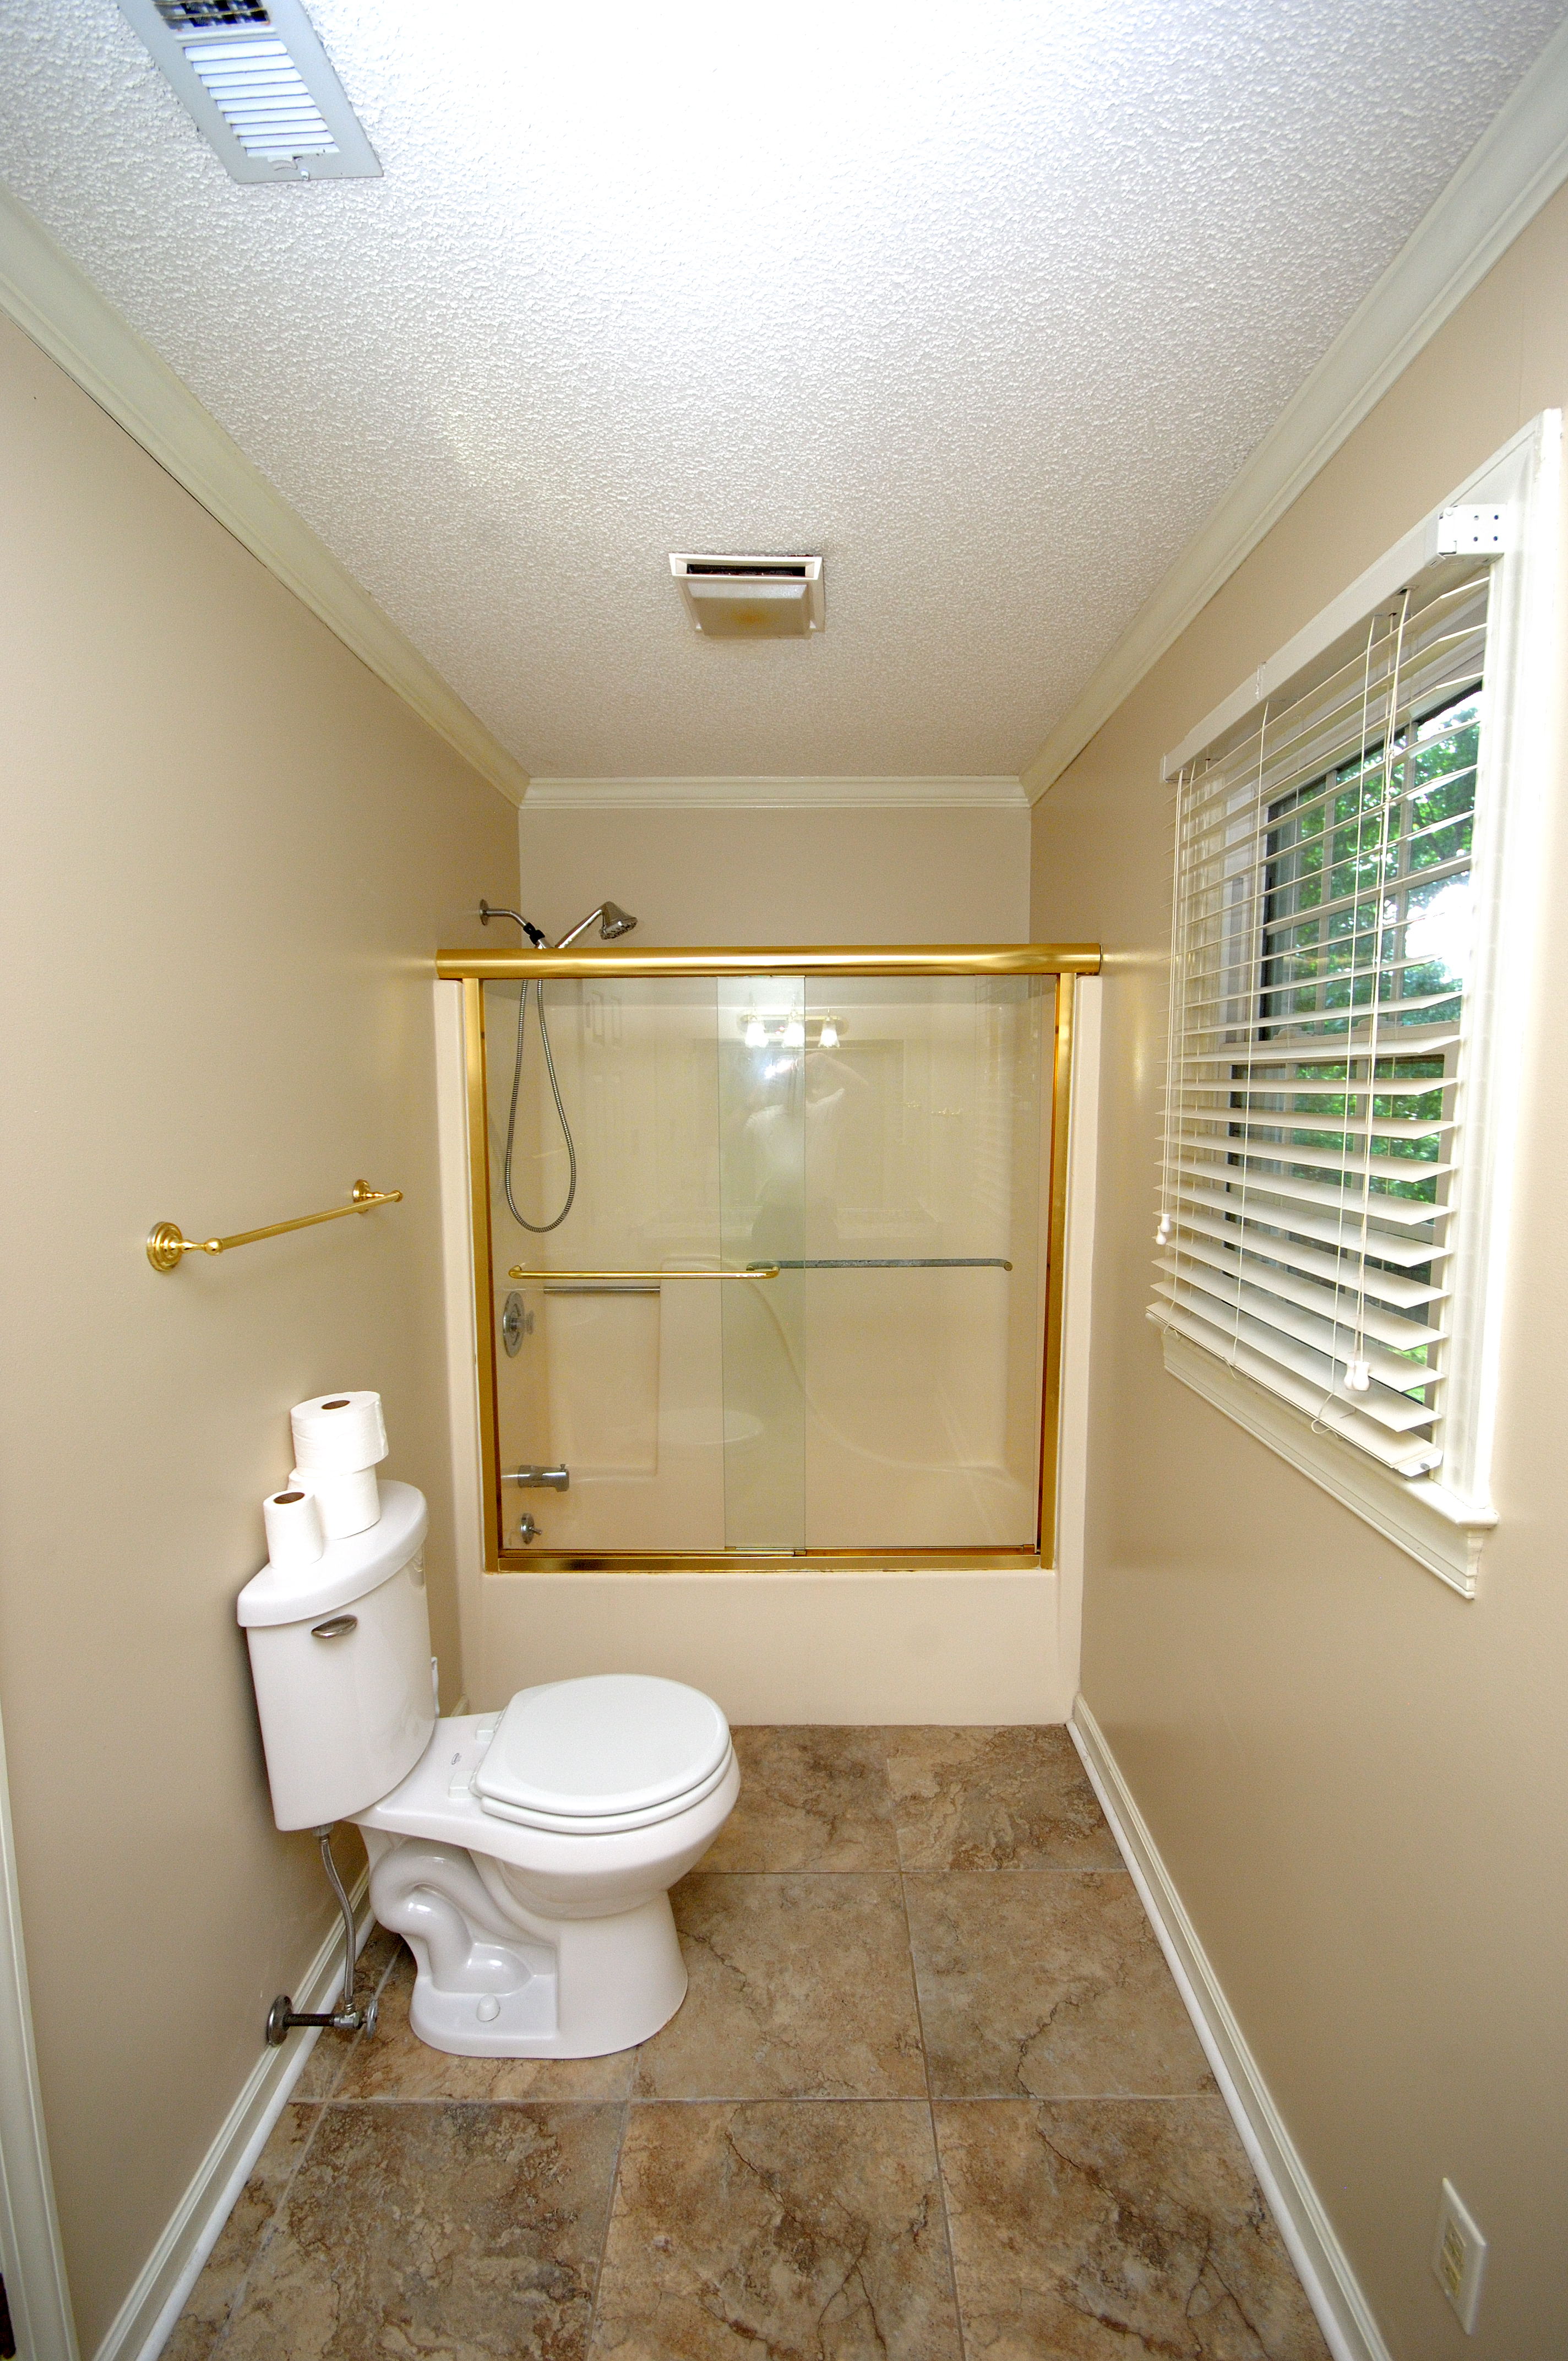 Goldsboro NC - Homes for Rent - 603 Corbin Road Goldsboro NC 27534 - Bathroom